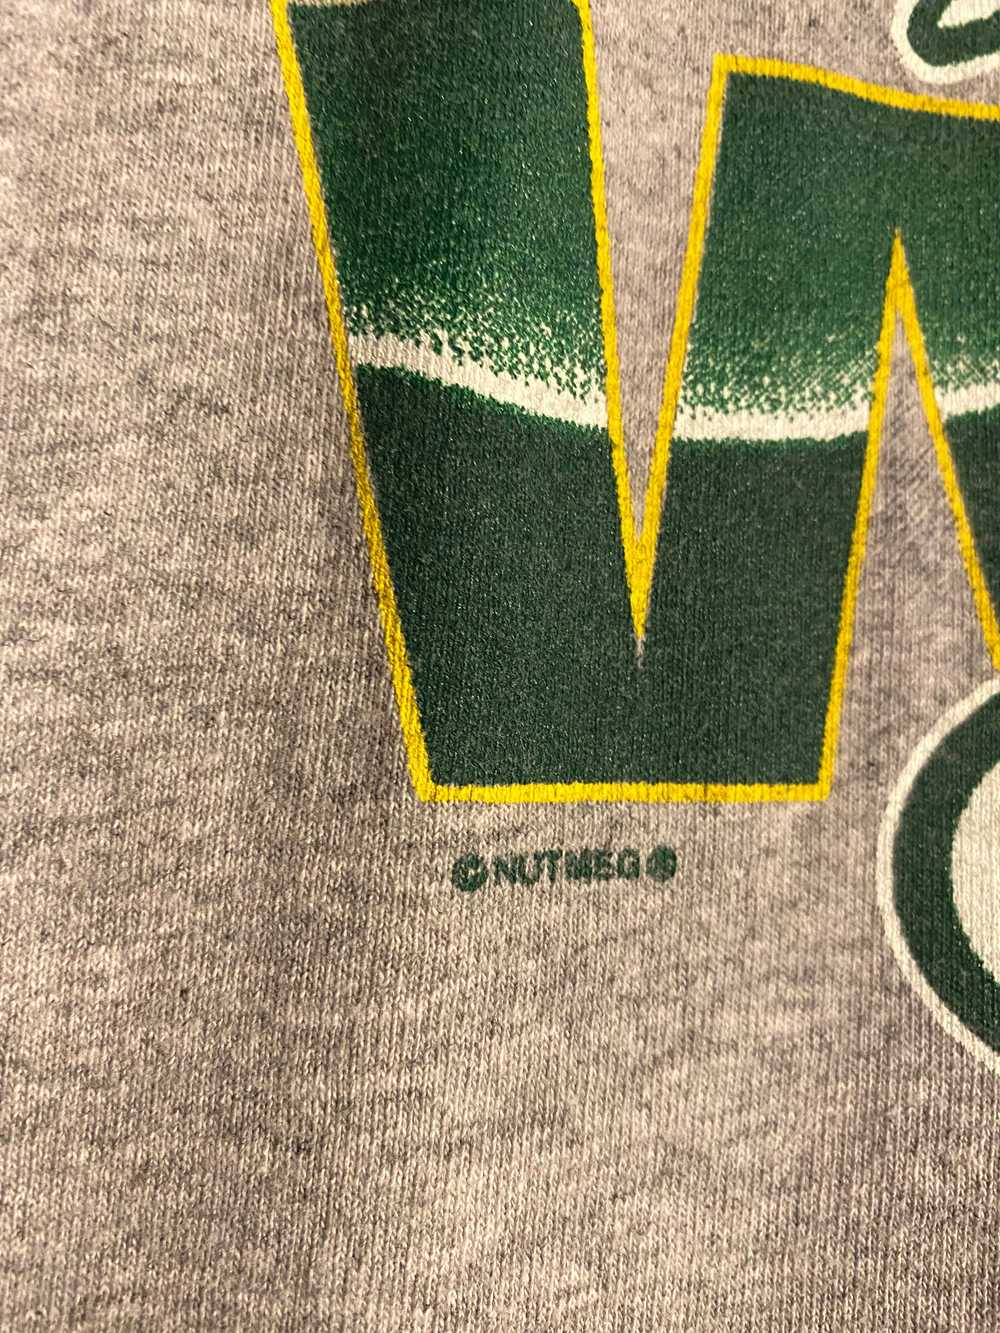 Vintage Reggie White Green Bay Packers T-Shirt Sz… - image 4